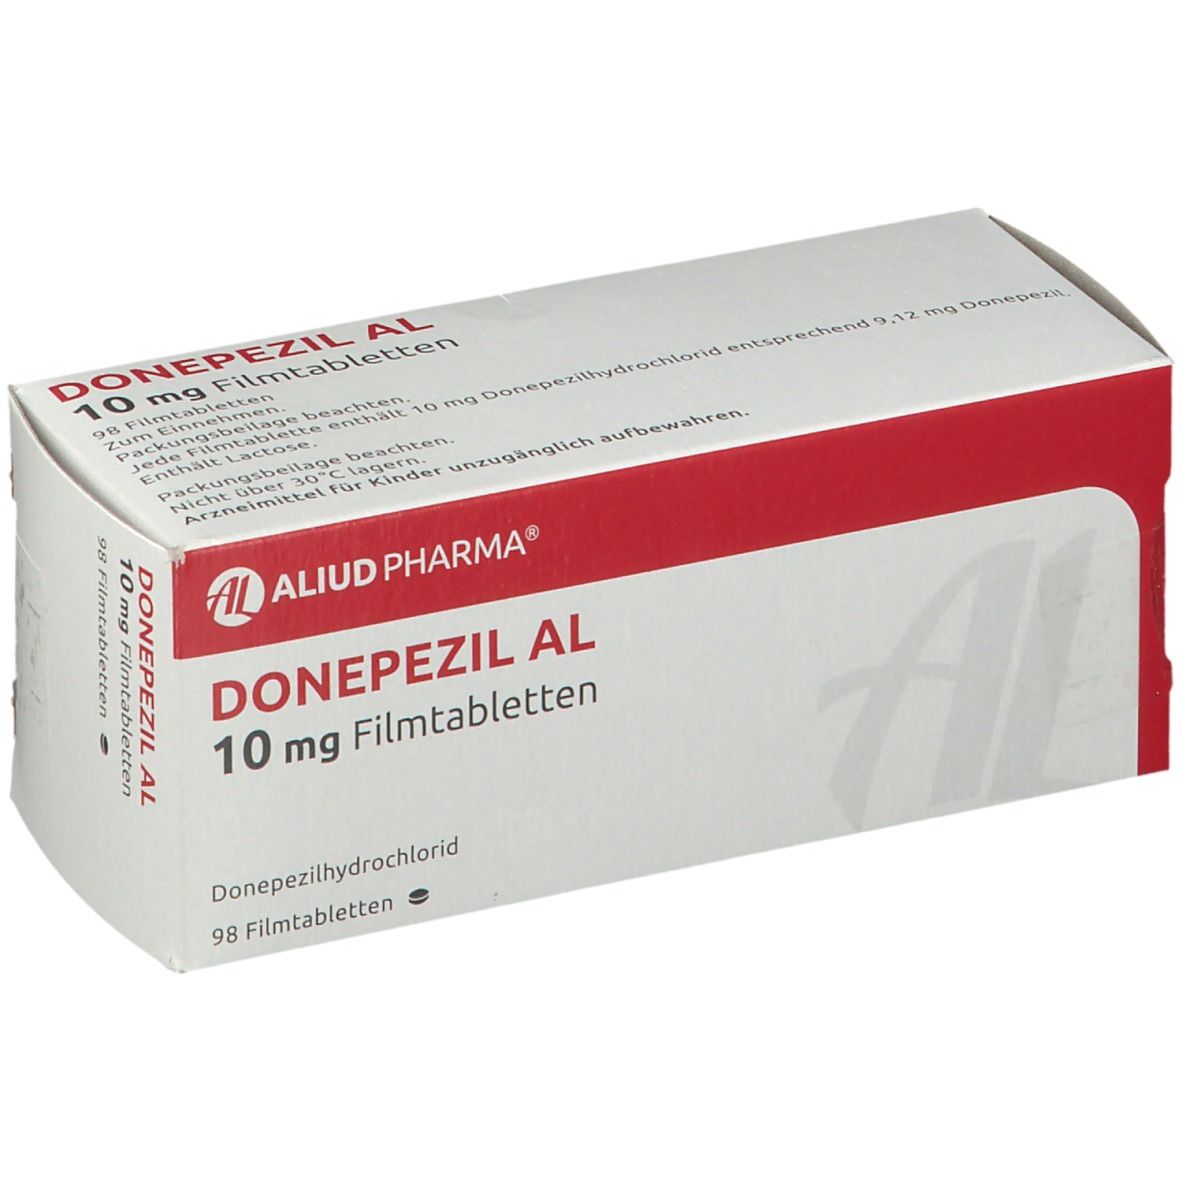 Donepezil AL 10 mg